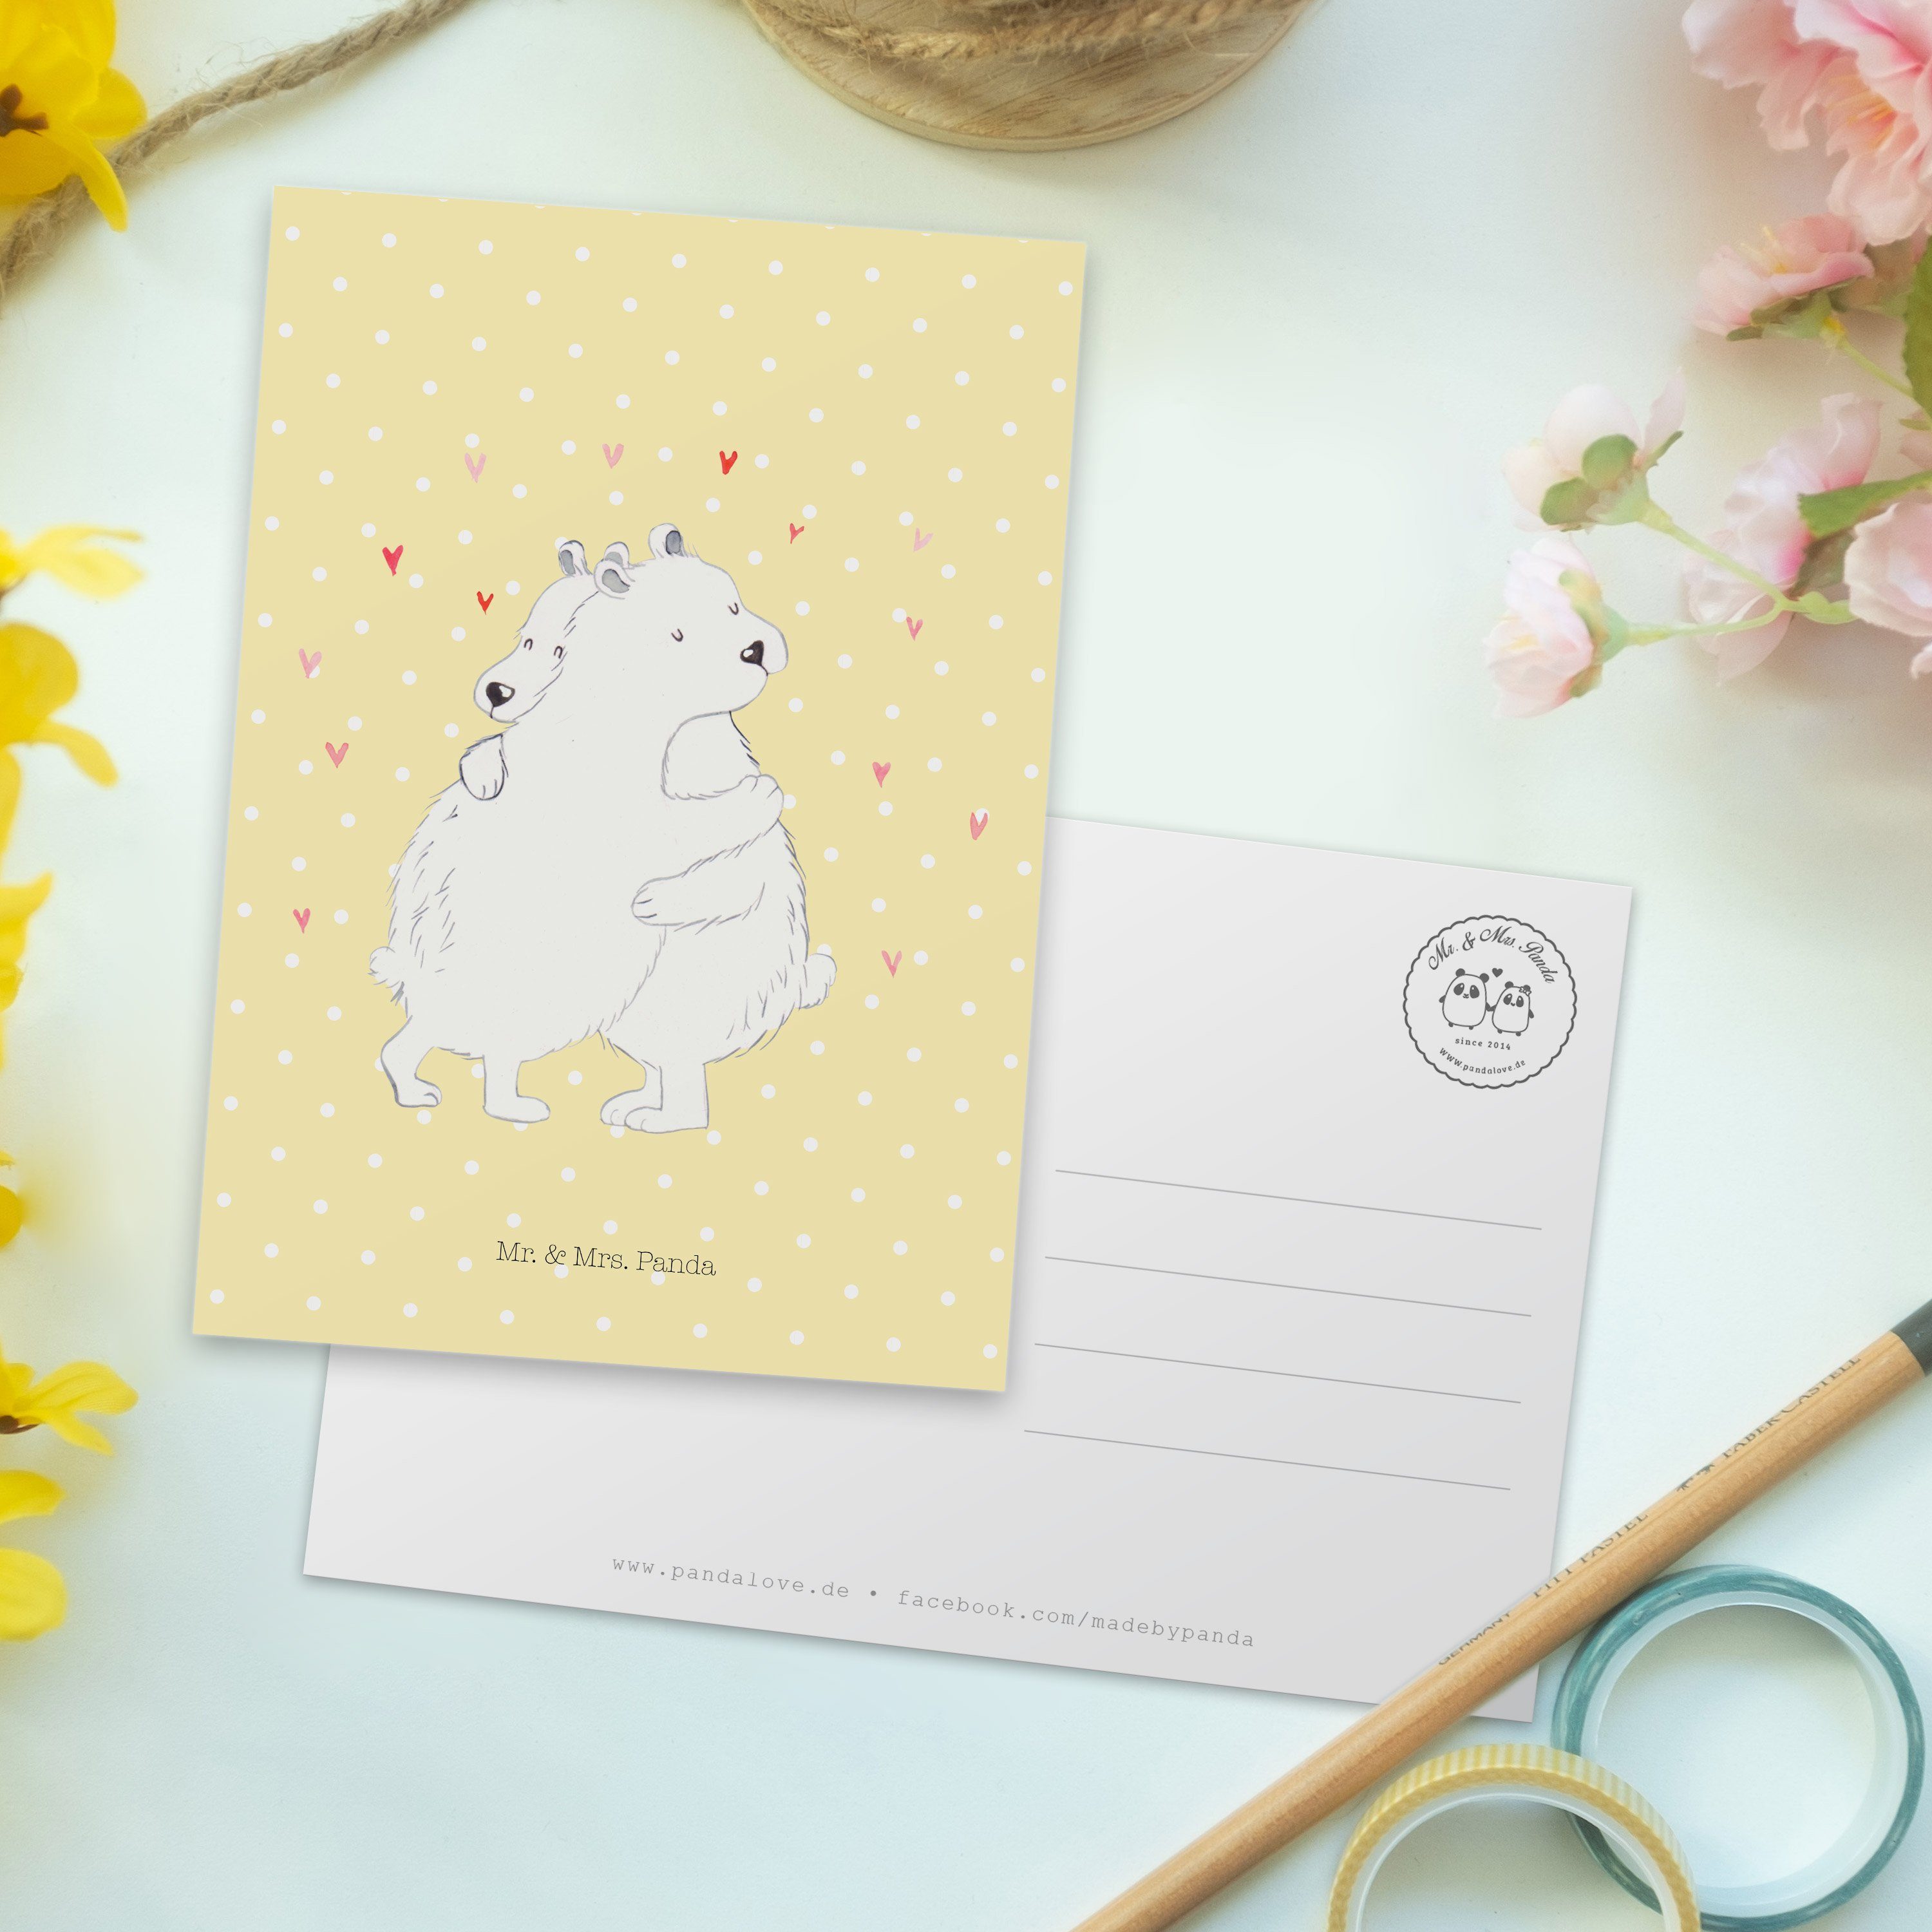 - & Grußkarte, Geschenk, Mr. Gelb - Pastell Umarmen Einladungskarte Eisbär Panda Mrs. Postkarte